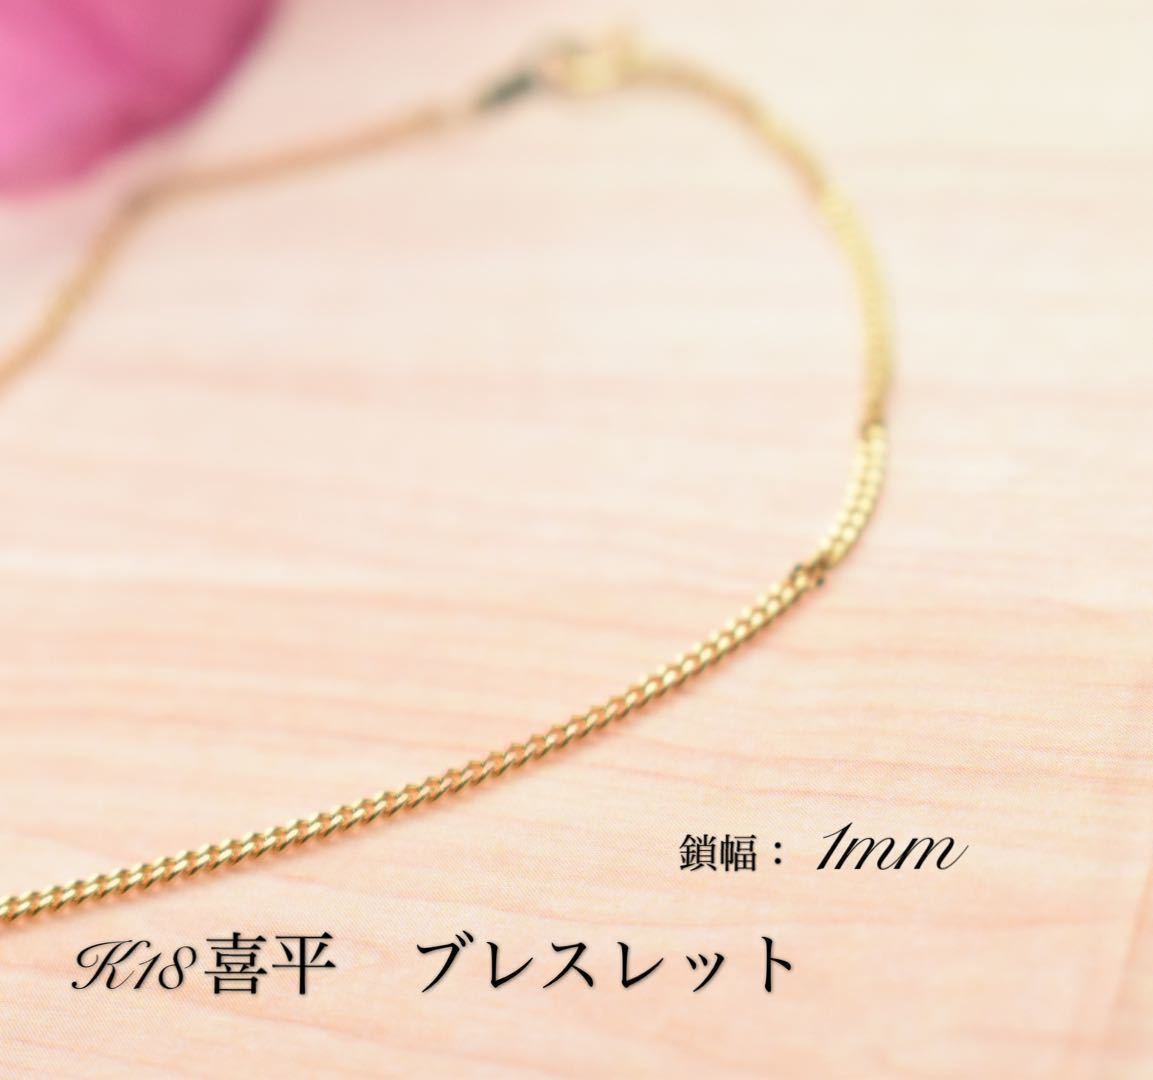 K18 18 Gold Kihei Chain Bracelet 25 см. Неклет